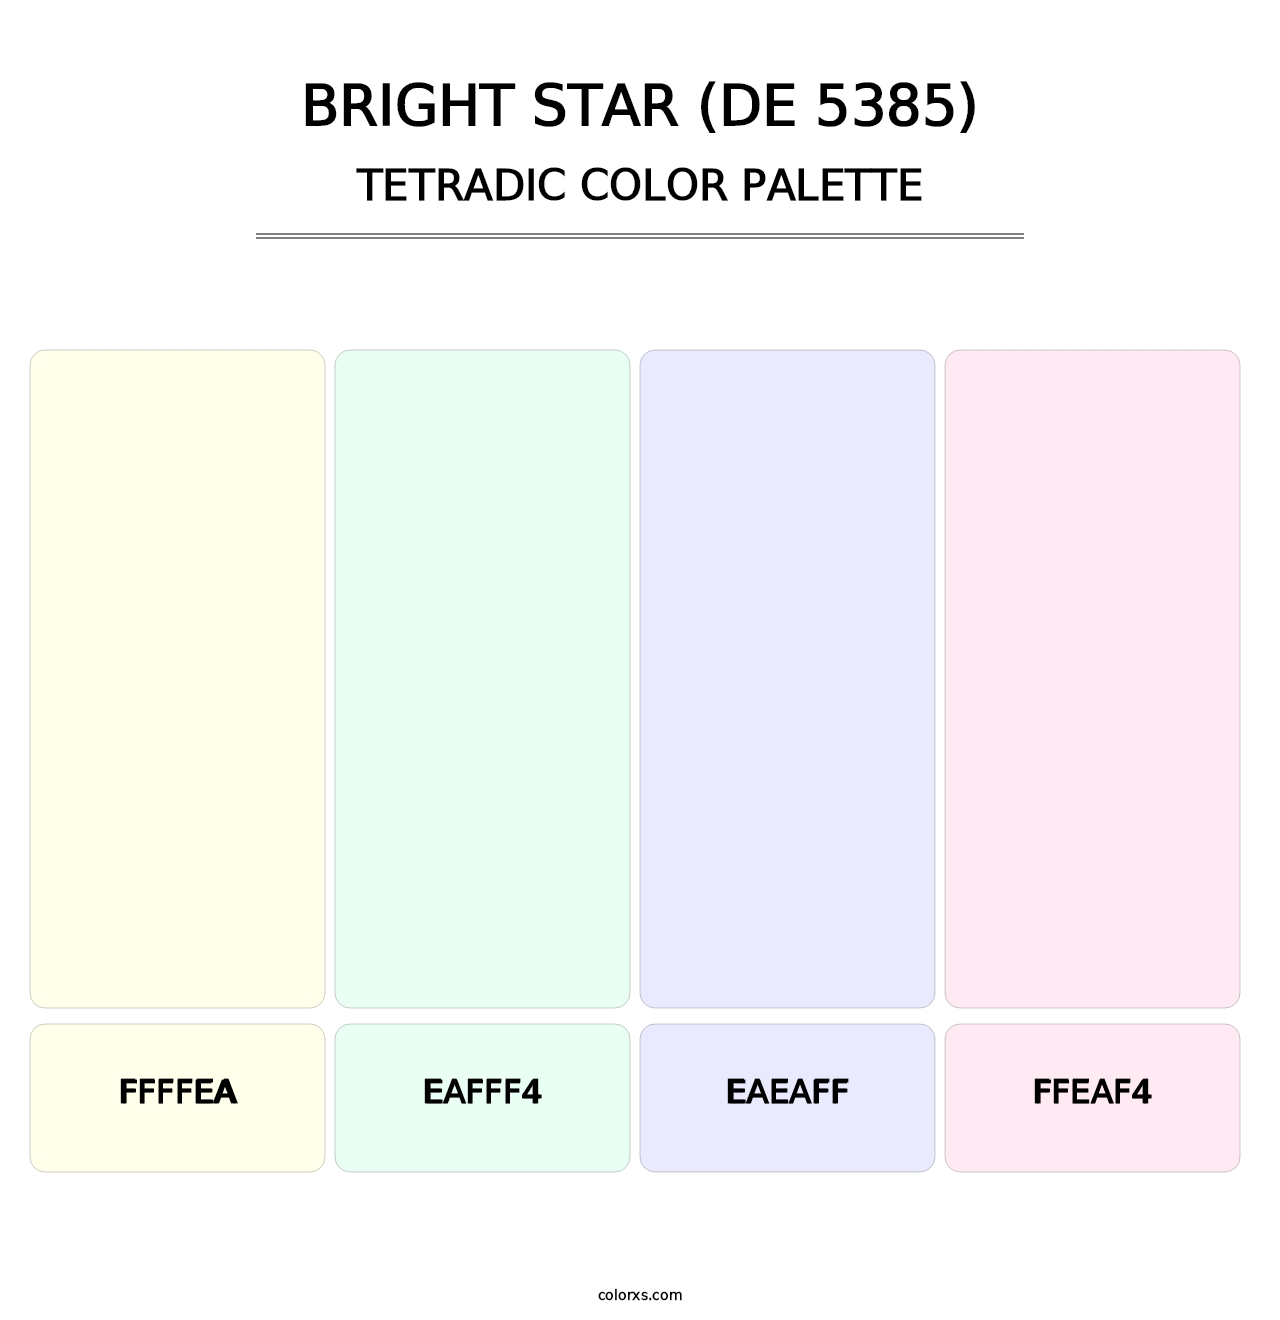 Bright Star (DE 5385) - Tetradic Color Palette